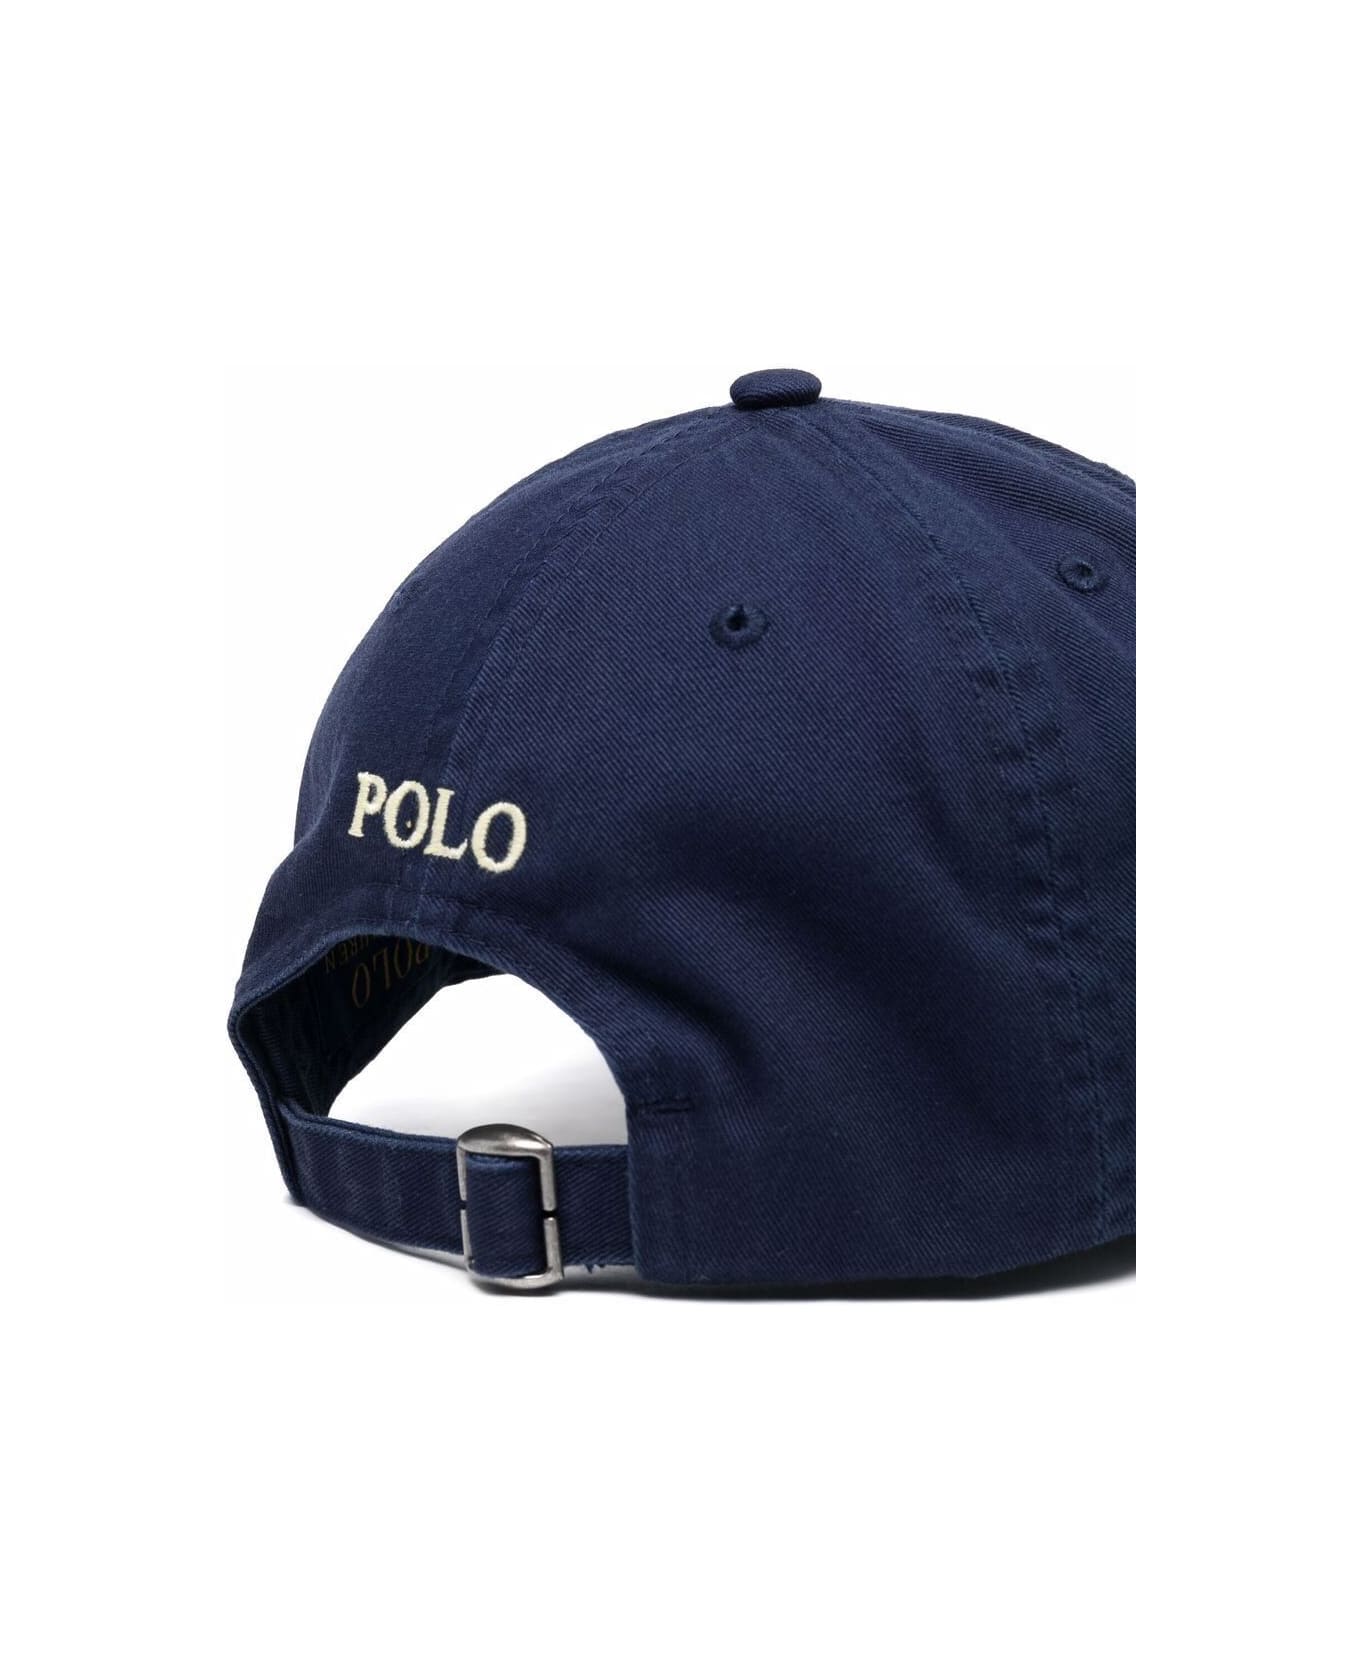 Polo Ralph Lauren Clsc Cap Apparel Accessories Hat - Newport Navy